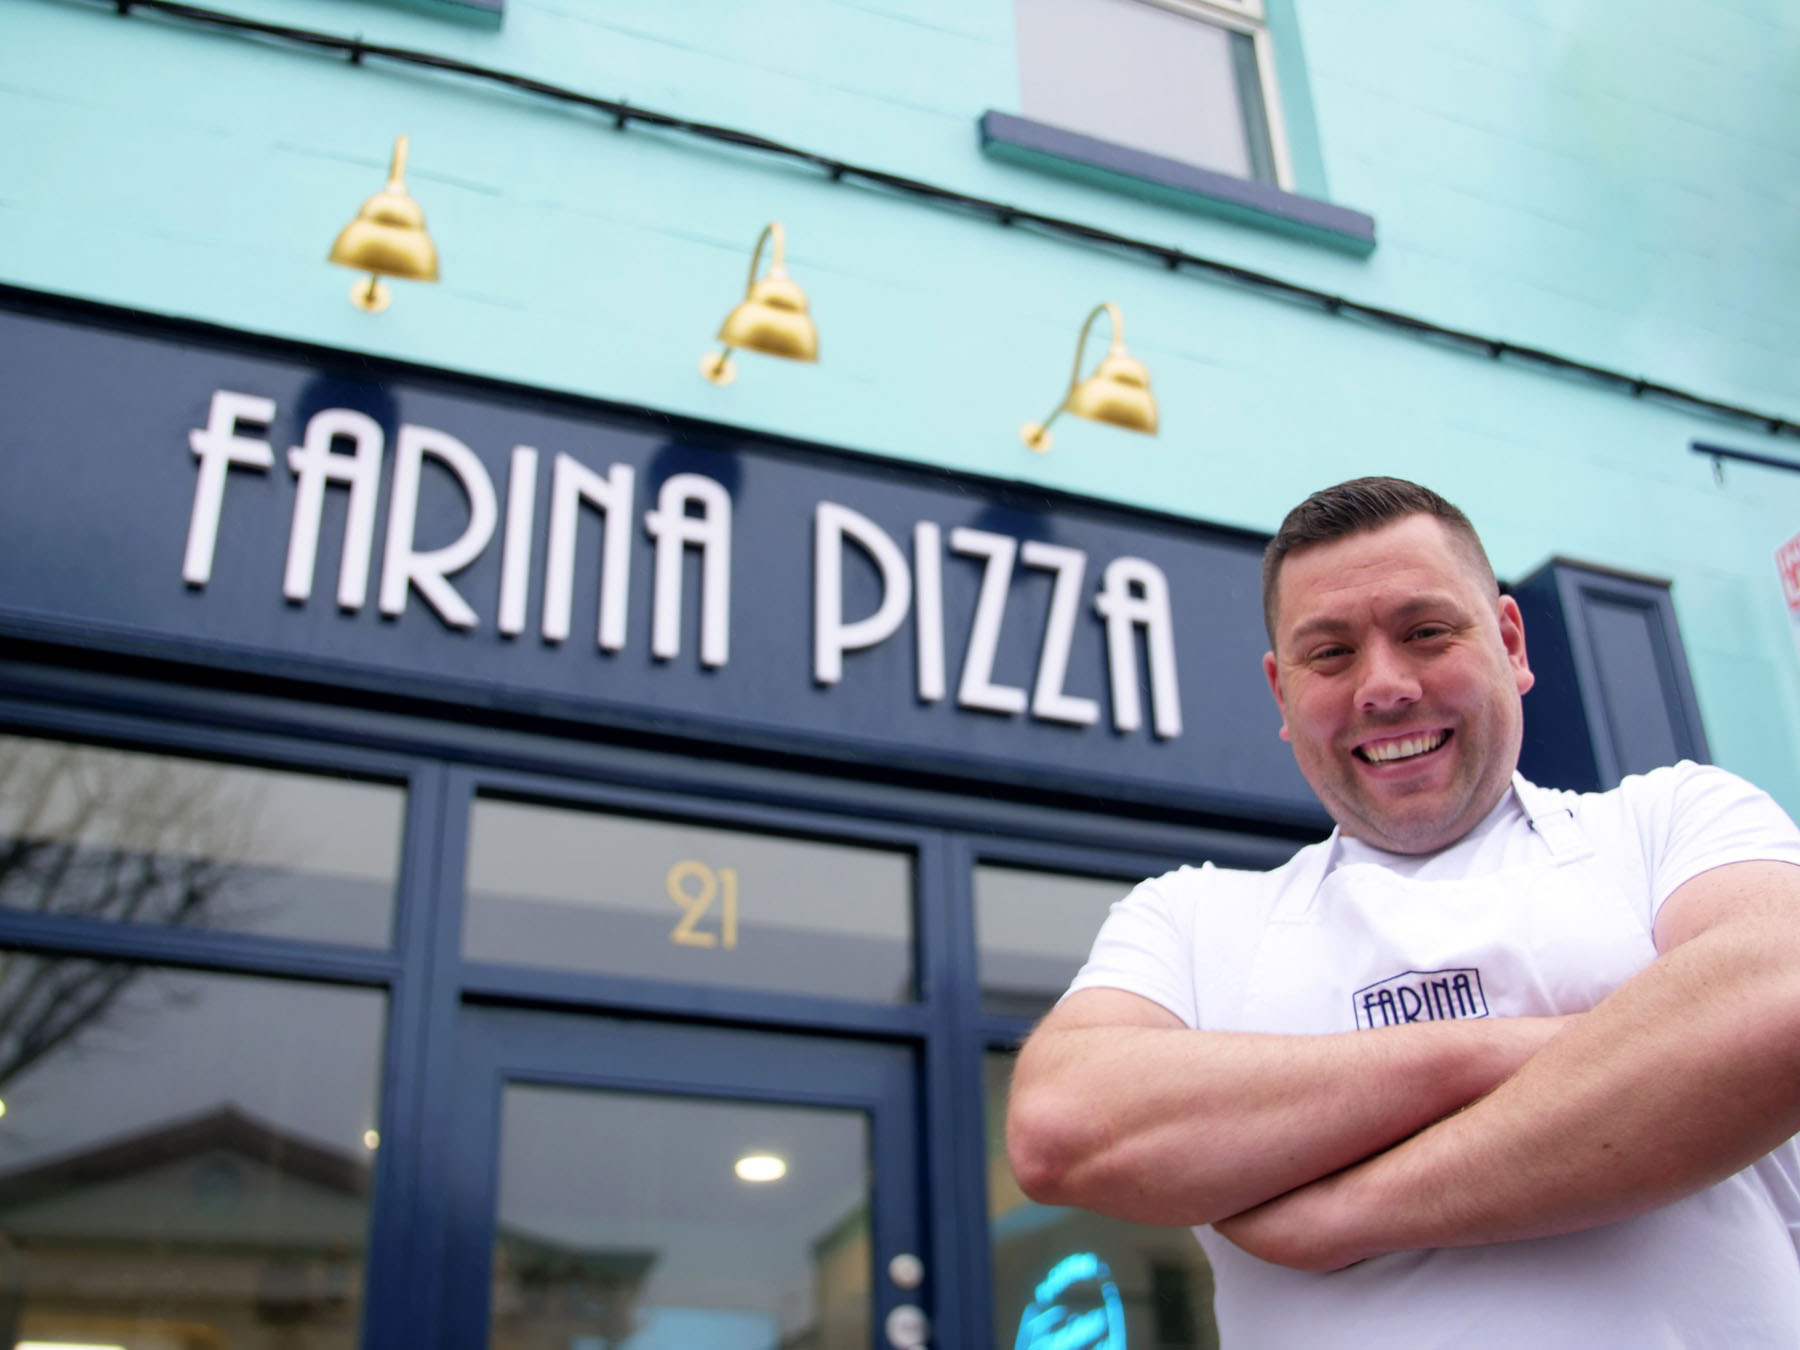 Farina Pizza increases average order value 30% with restaurant kiosks